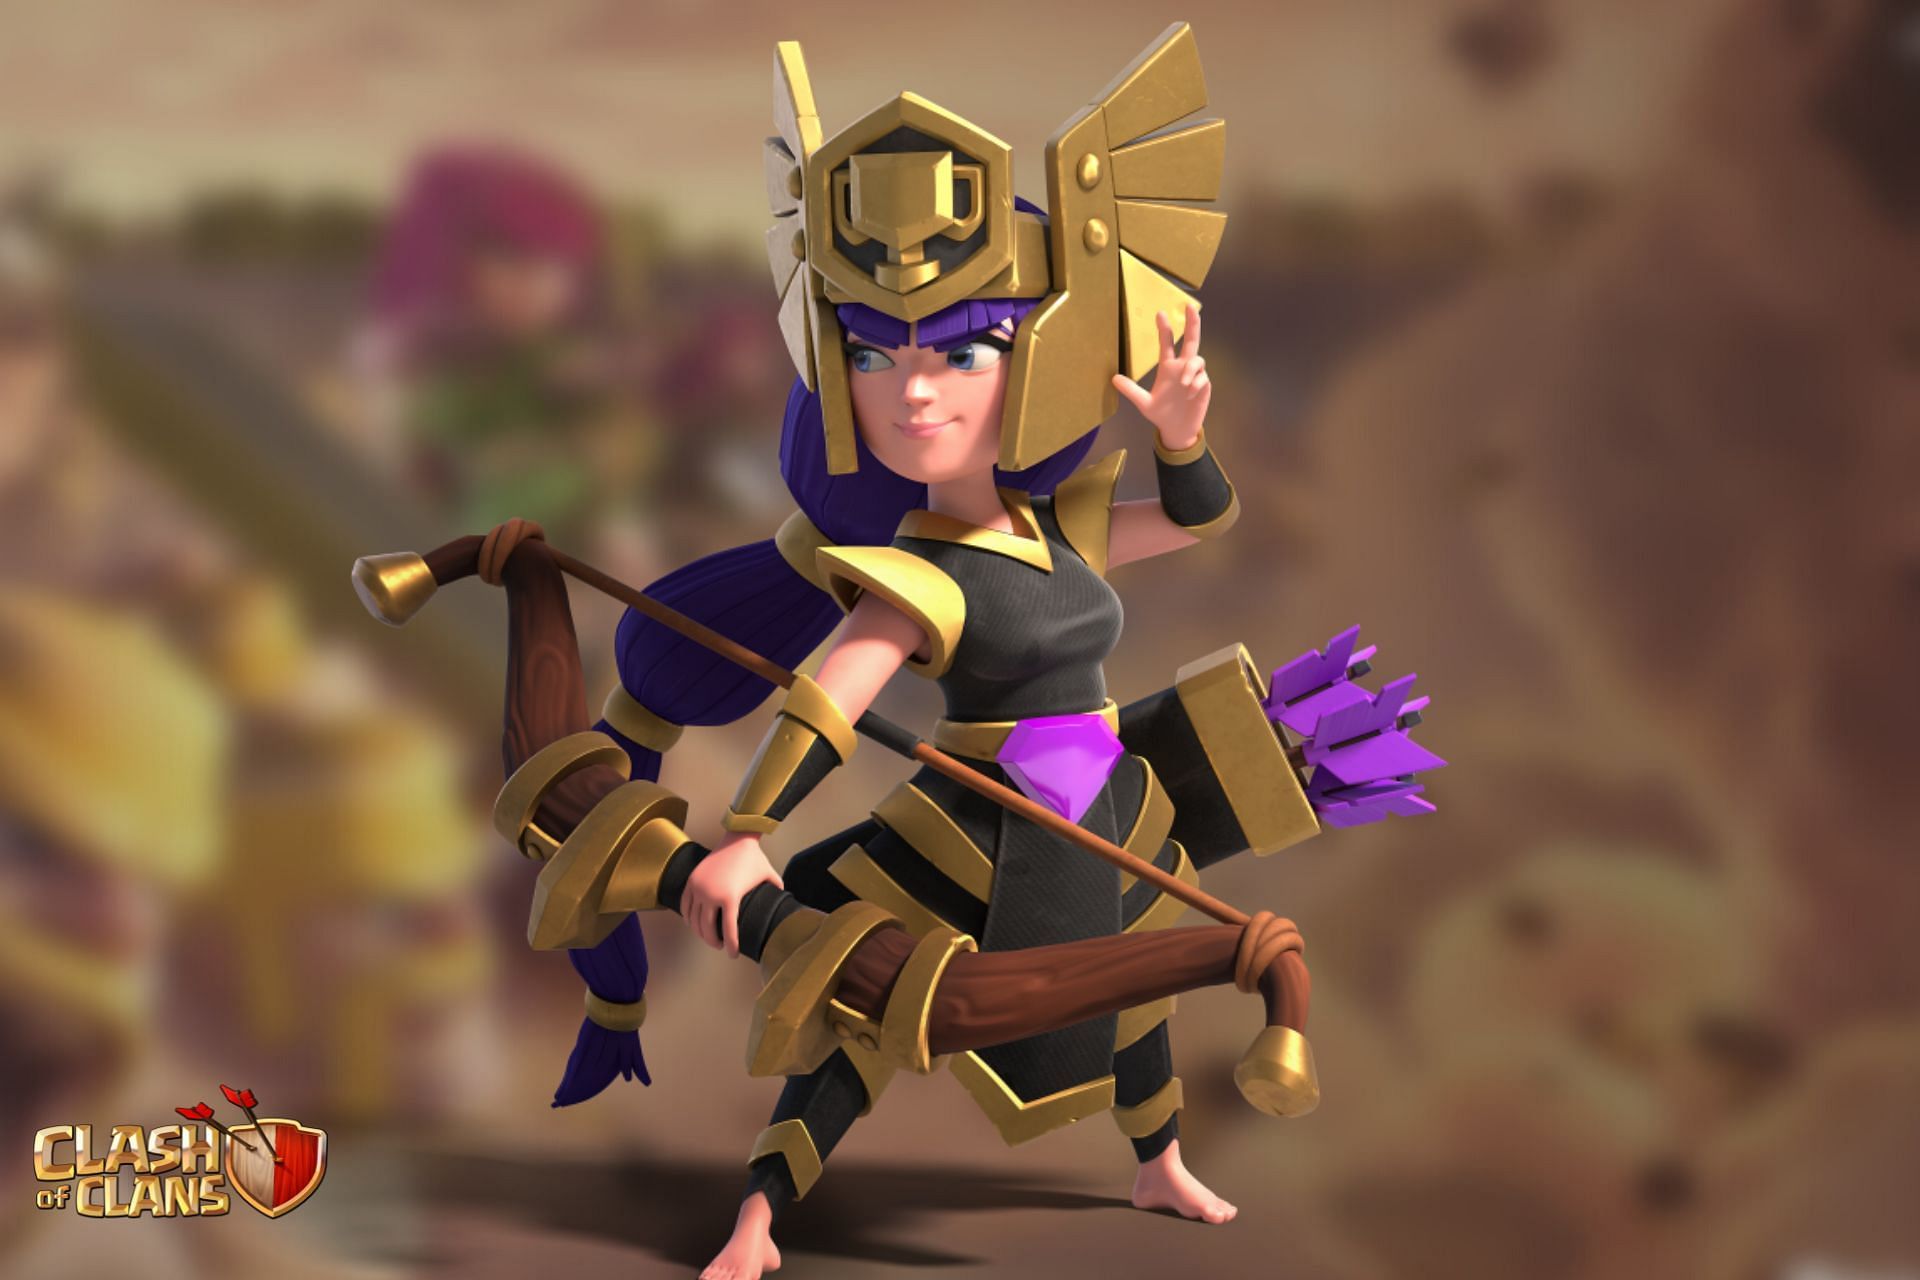 Champion Queen hero skin in Clash of Clans (Image via Sportskeeda)